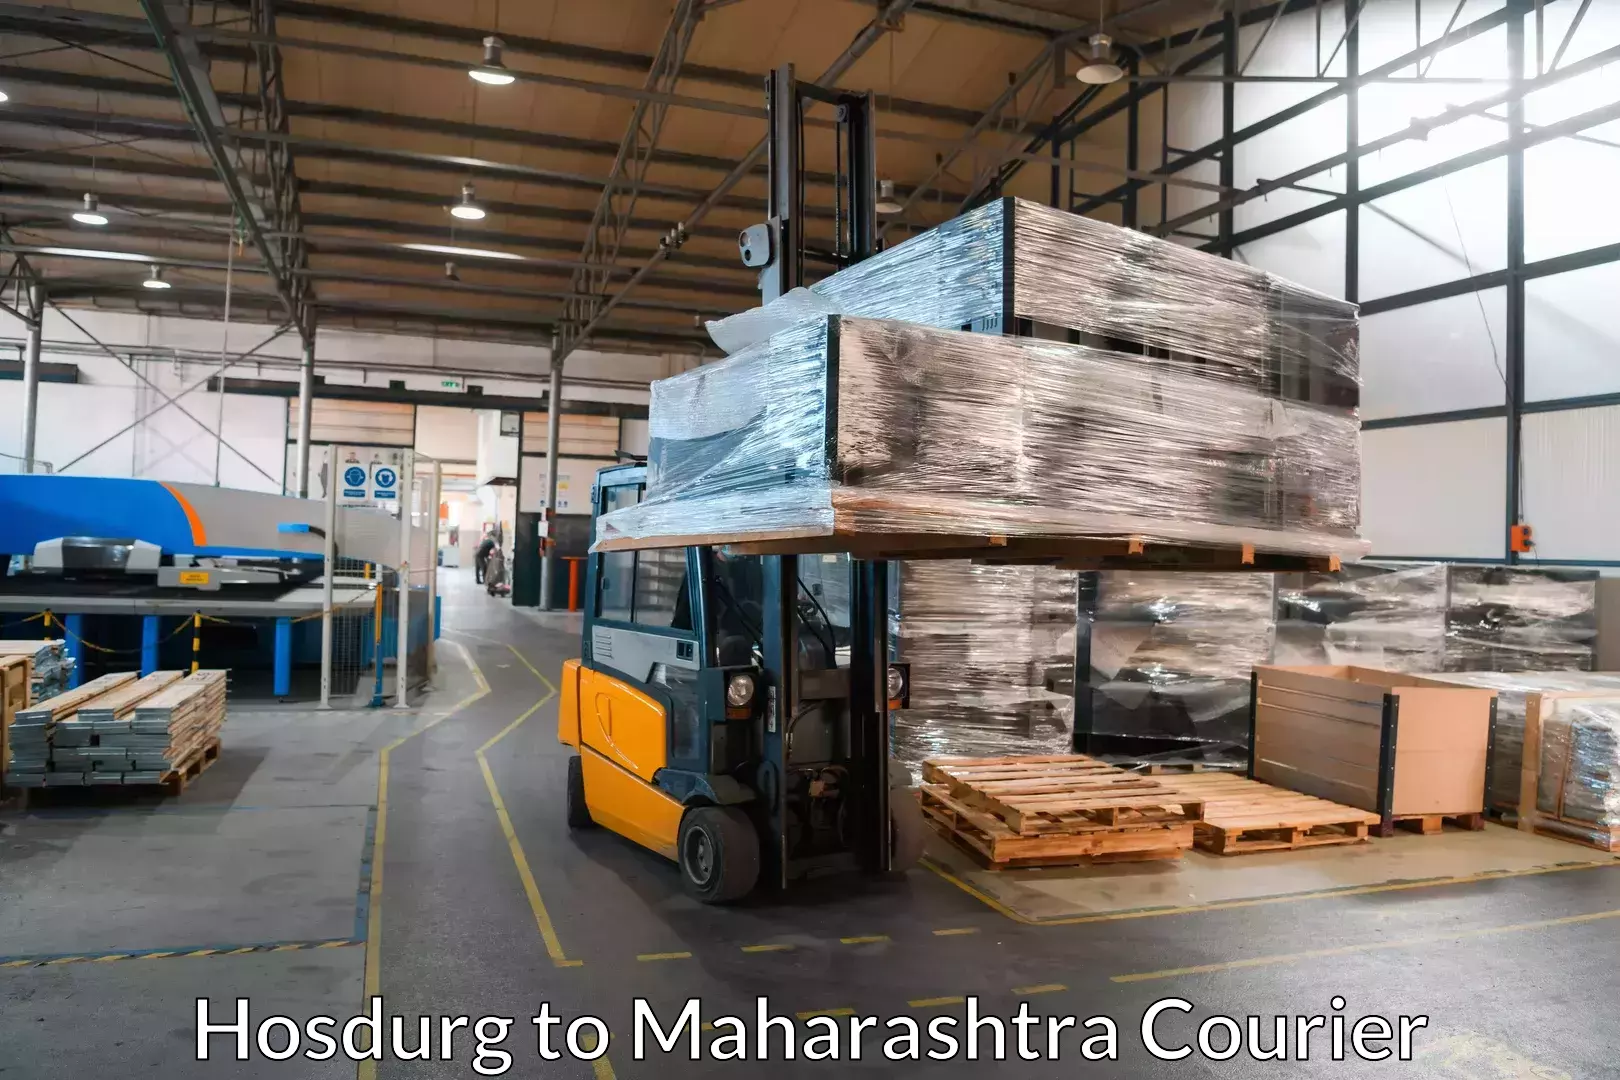 Trusted moving company Hosdurg to Buldhana